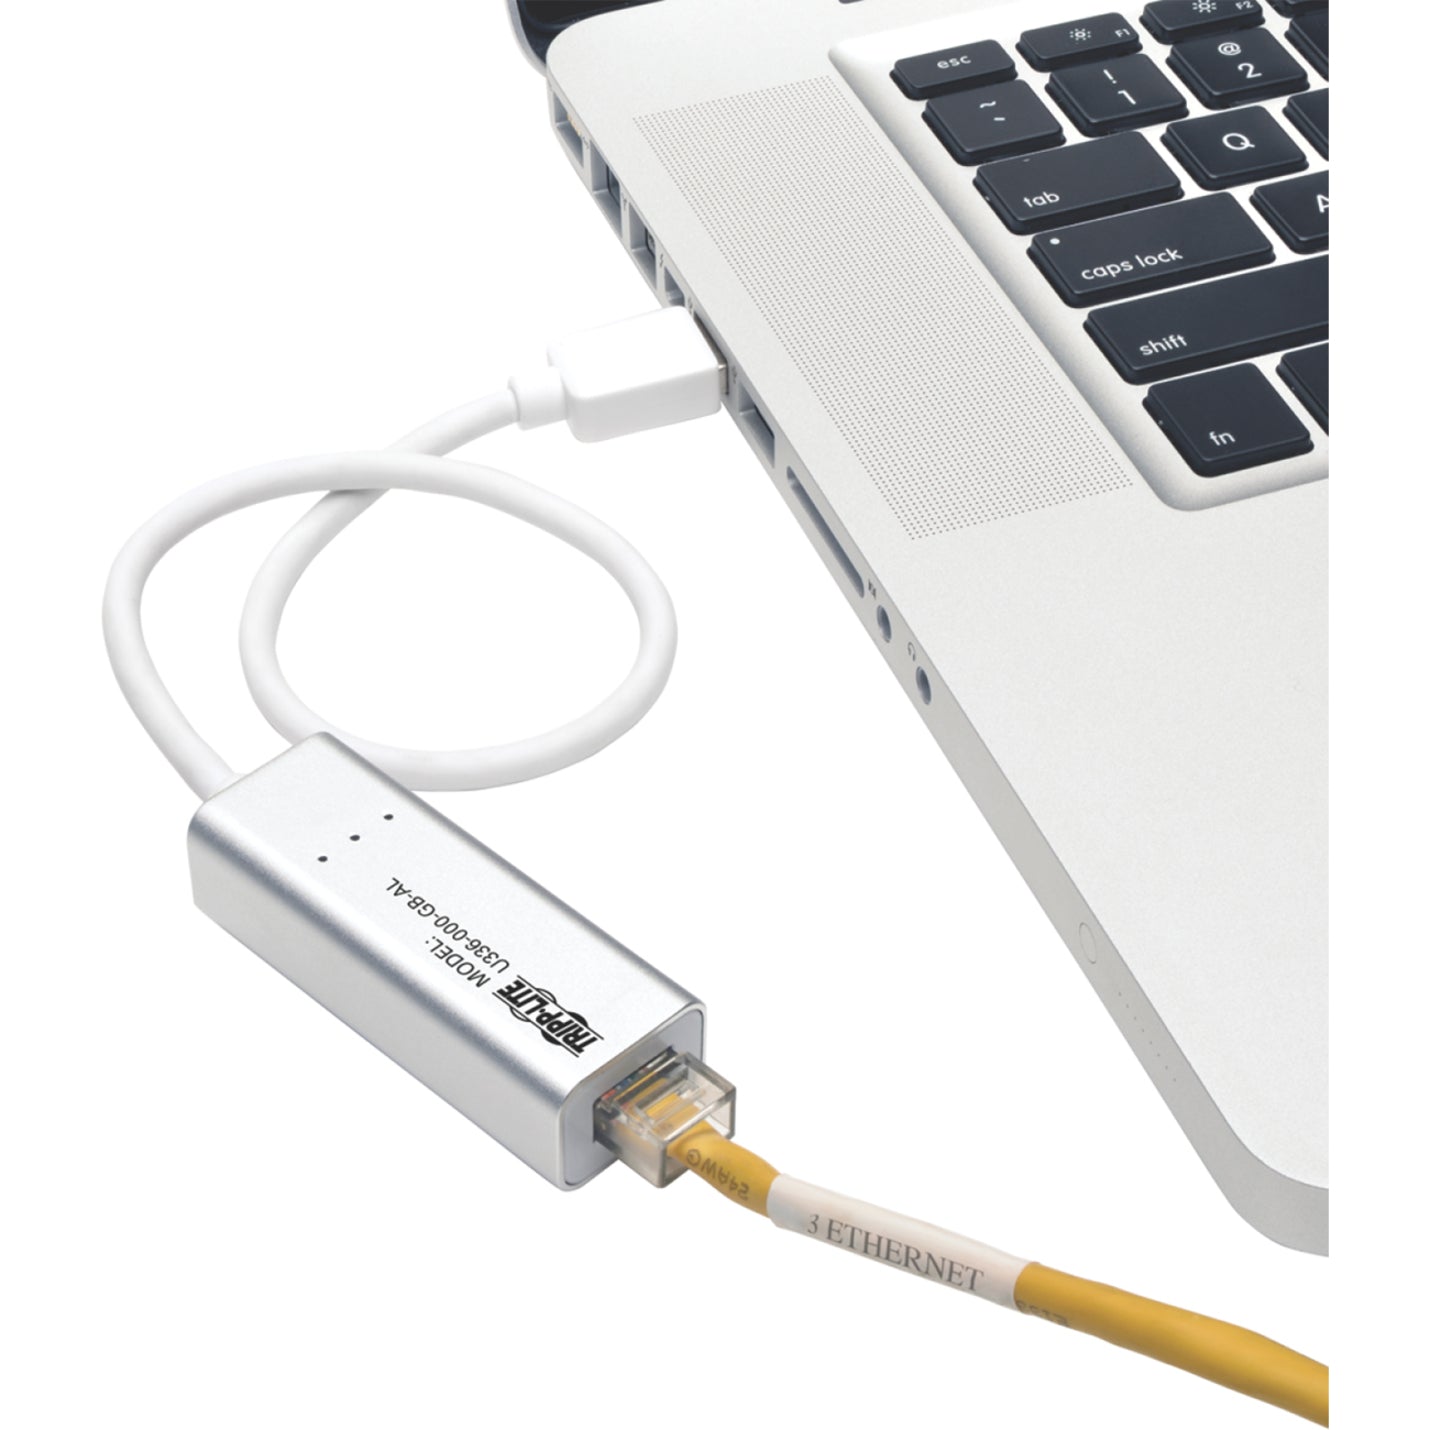 Tripp Lite U336-000-GB-AL USB 3.0 SuperSpeed to Gigabit Ethernet NIC Network Adapter, High-Speed Internet Connection